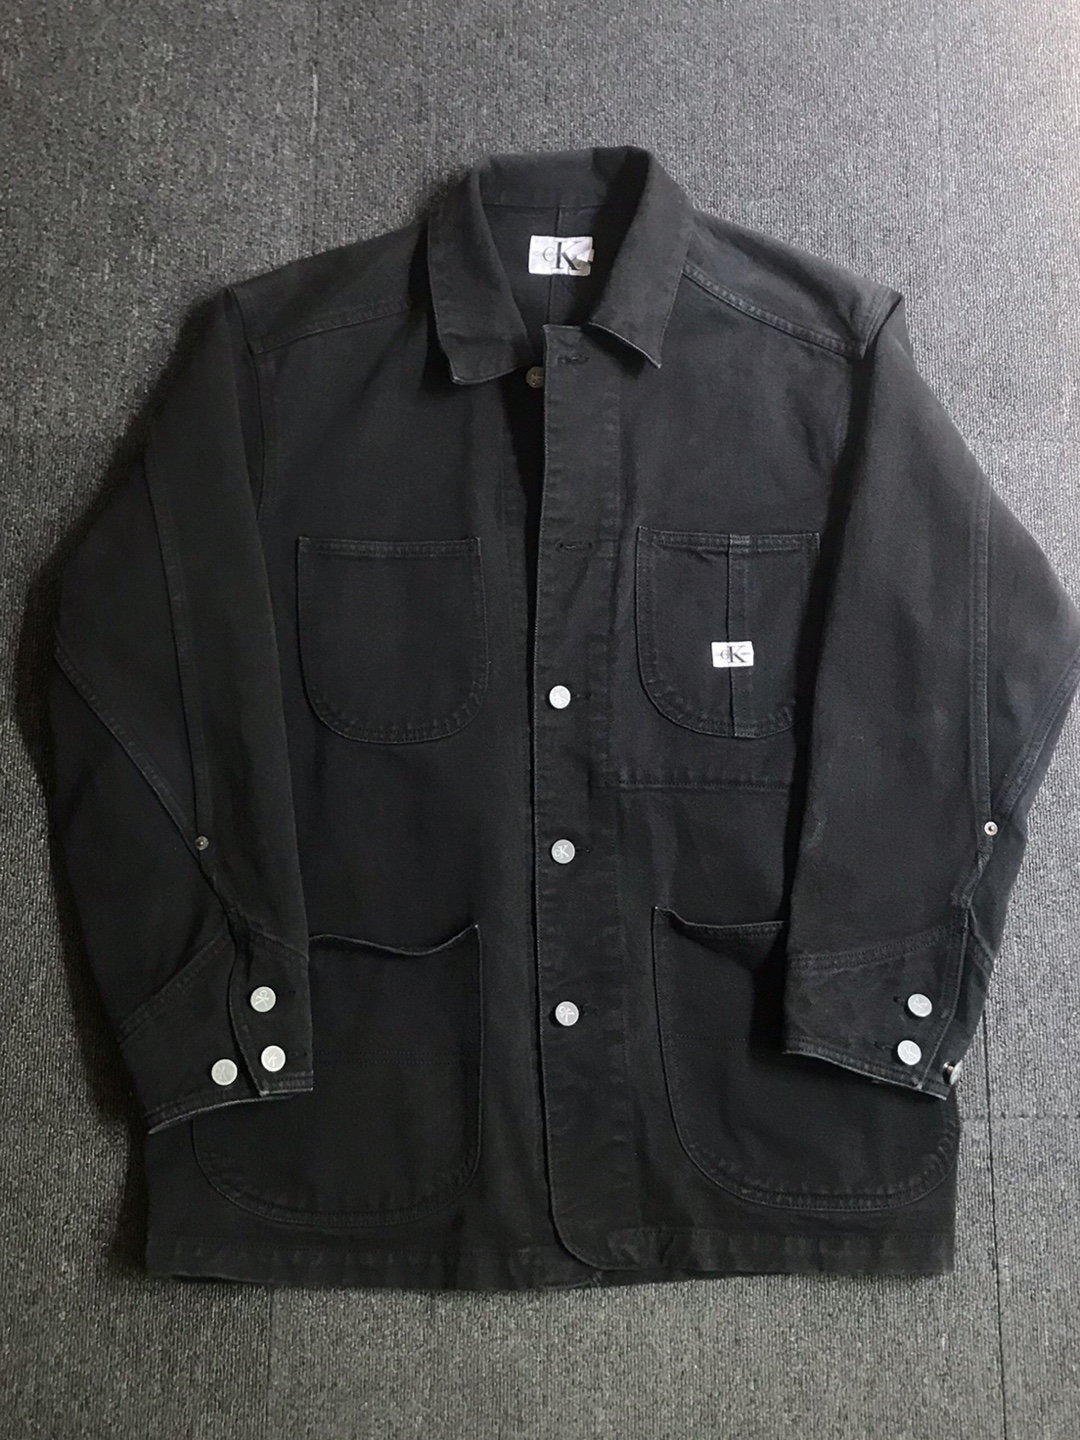 calvin klein jeans chore jacket (~105 추천)